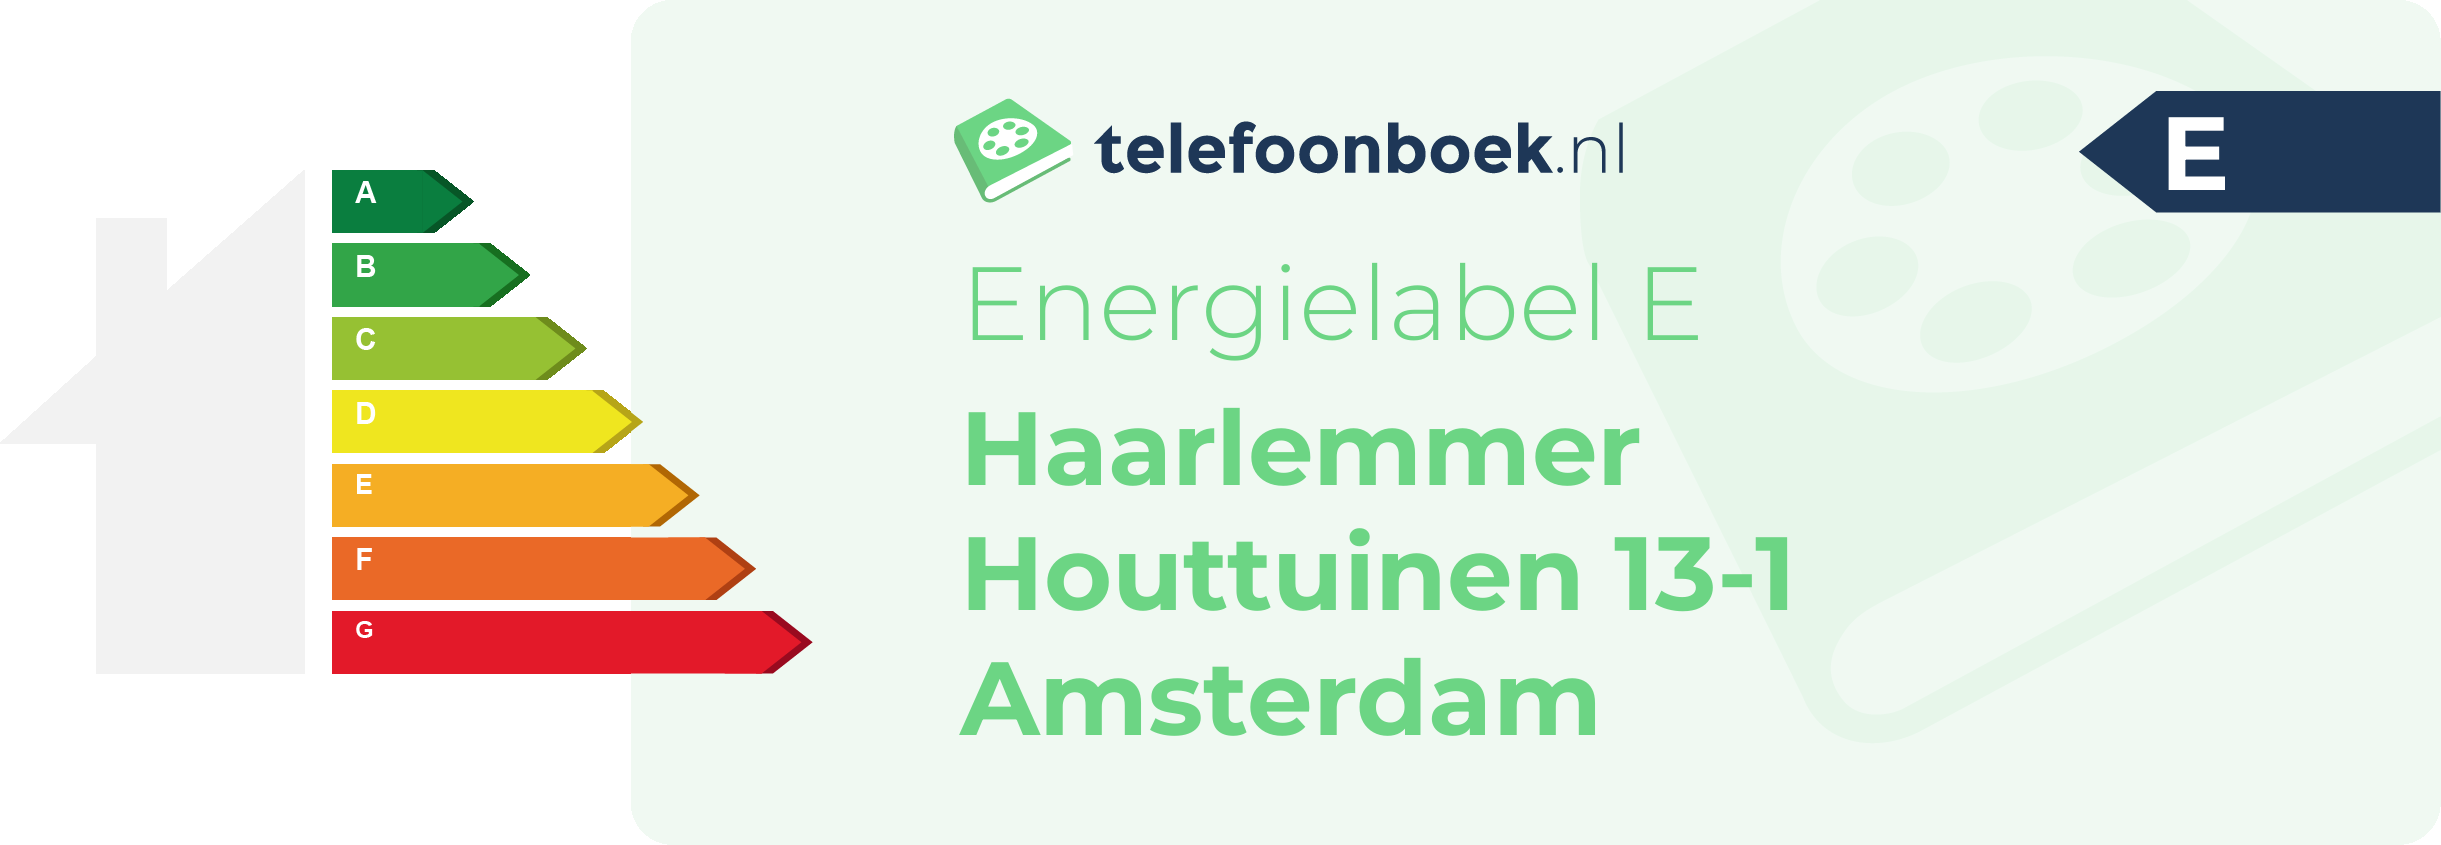 Energielabel Haarlemmer Houttuinen 13-1 Amsterdam